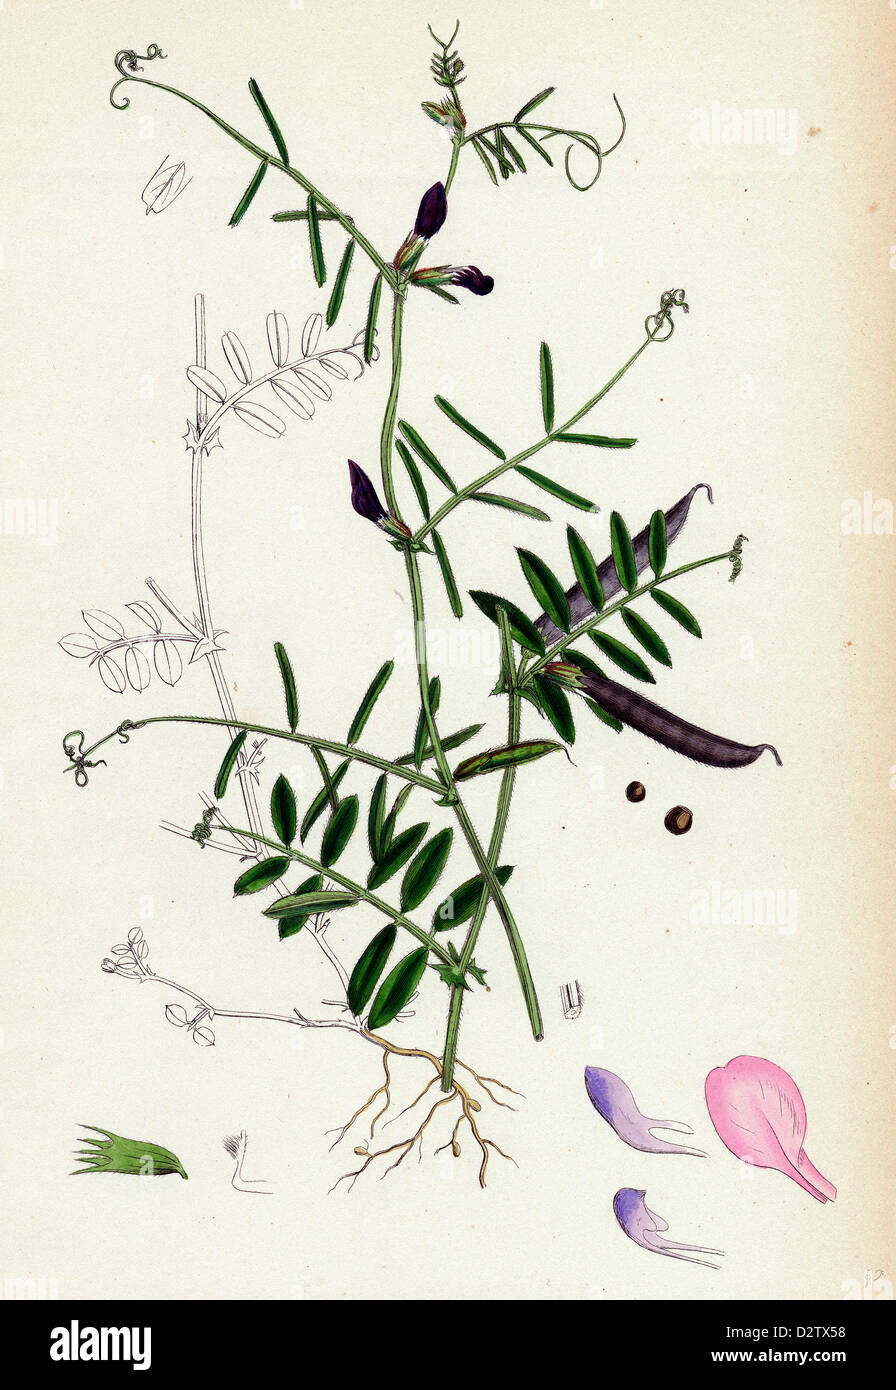 Vicia angustifolia var. a segetalis Common Wild Vetch var. a. Stock Photo